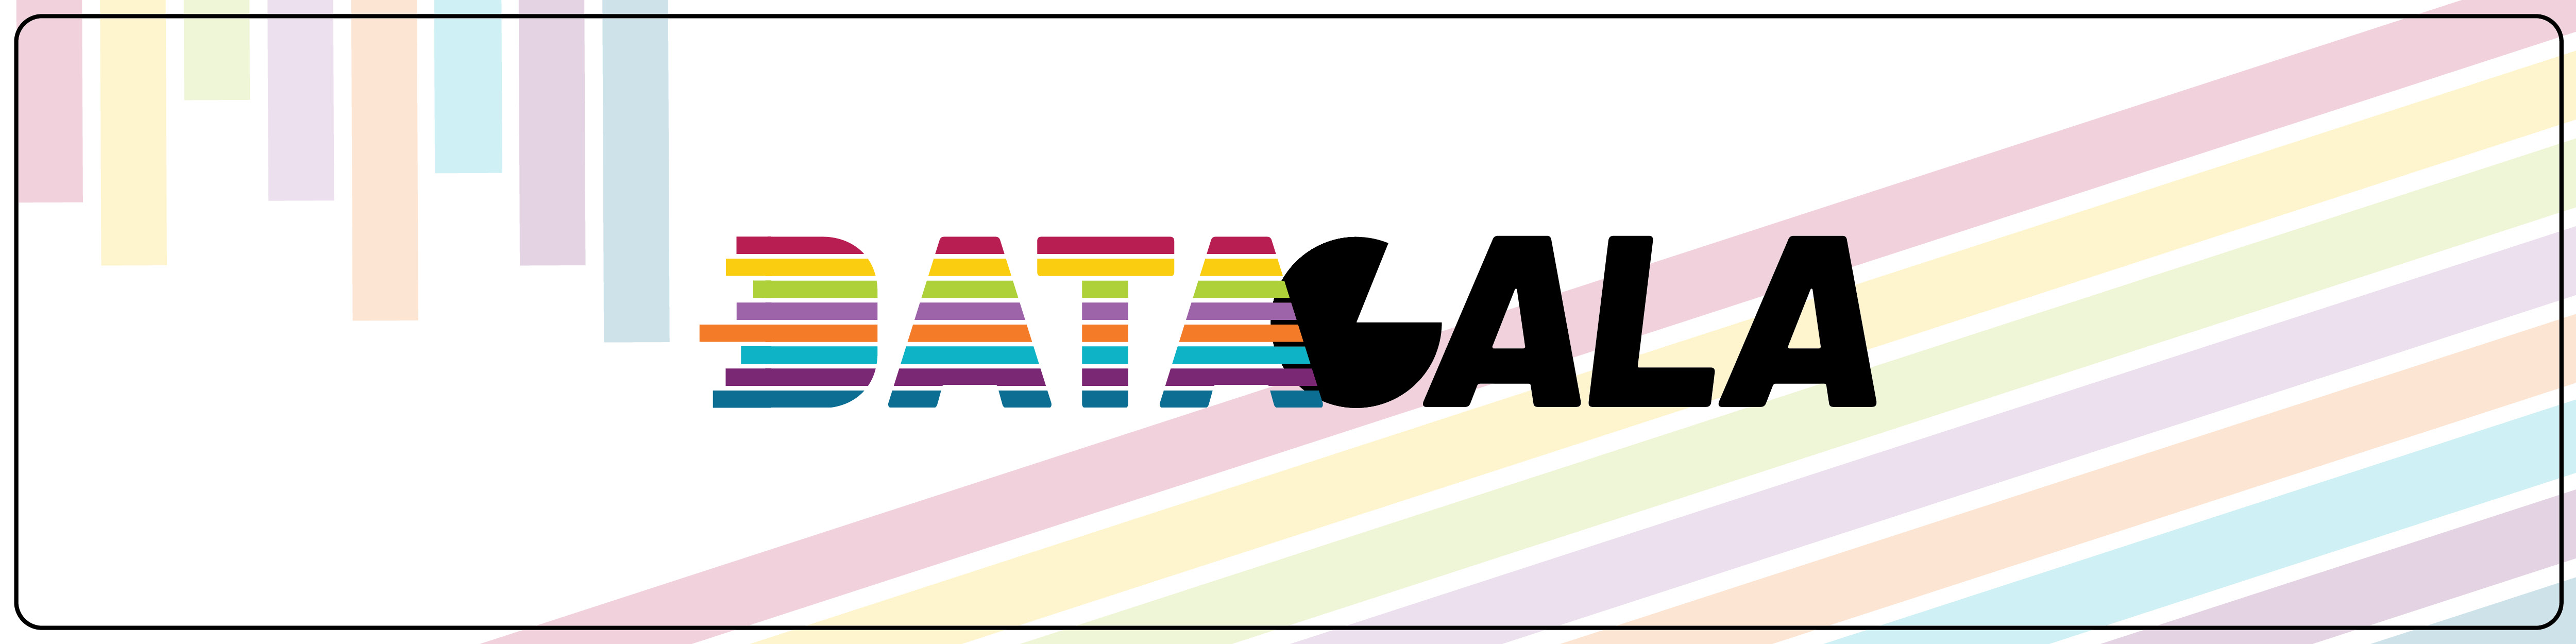 Data Gala logo on faded rainbow striped background 